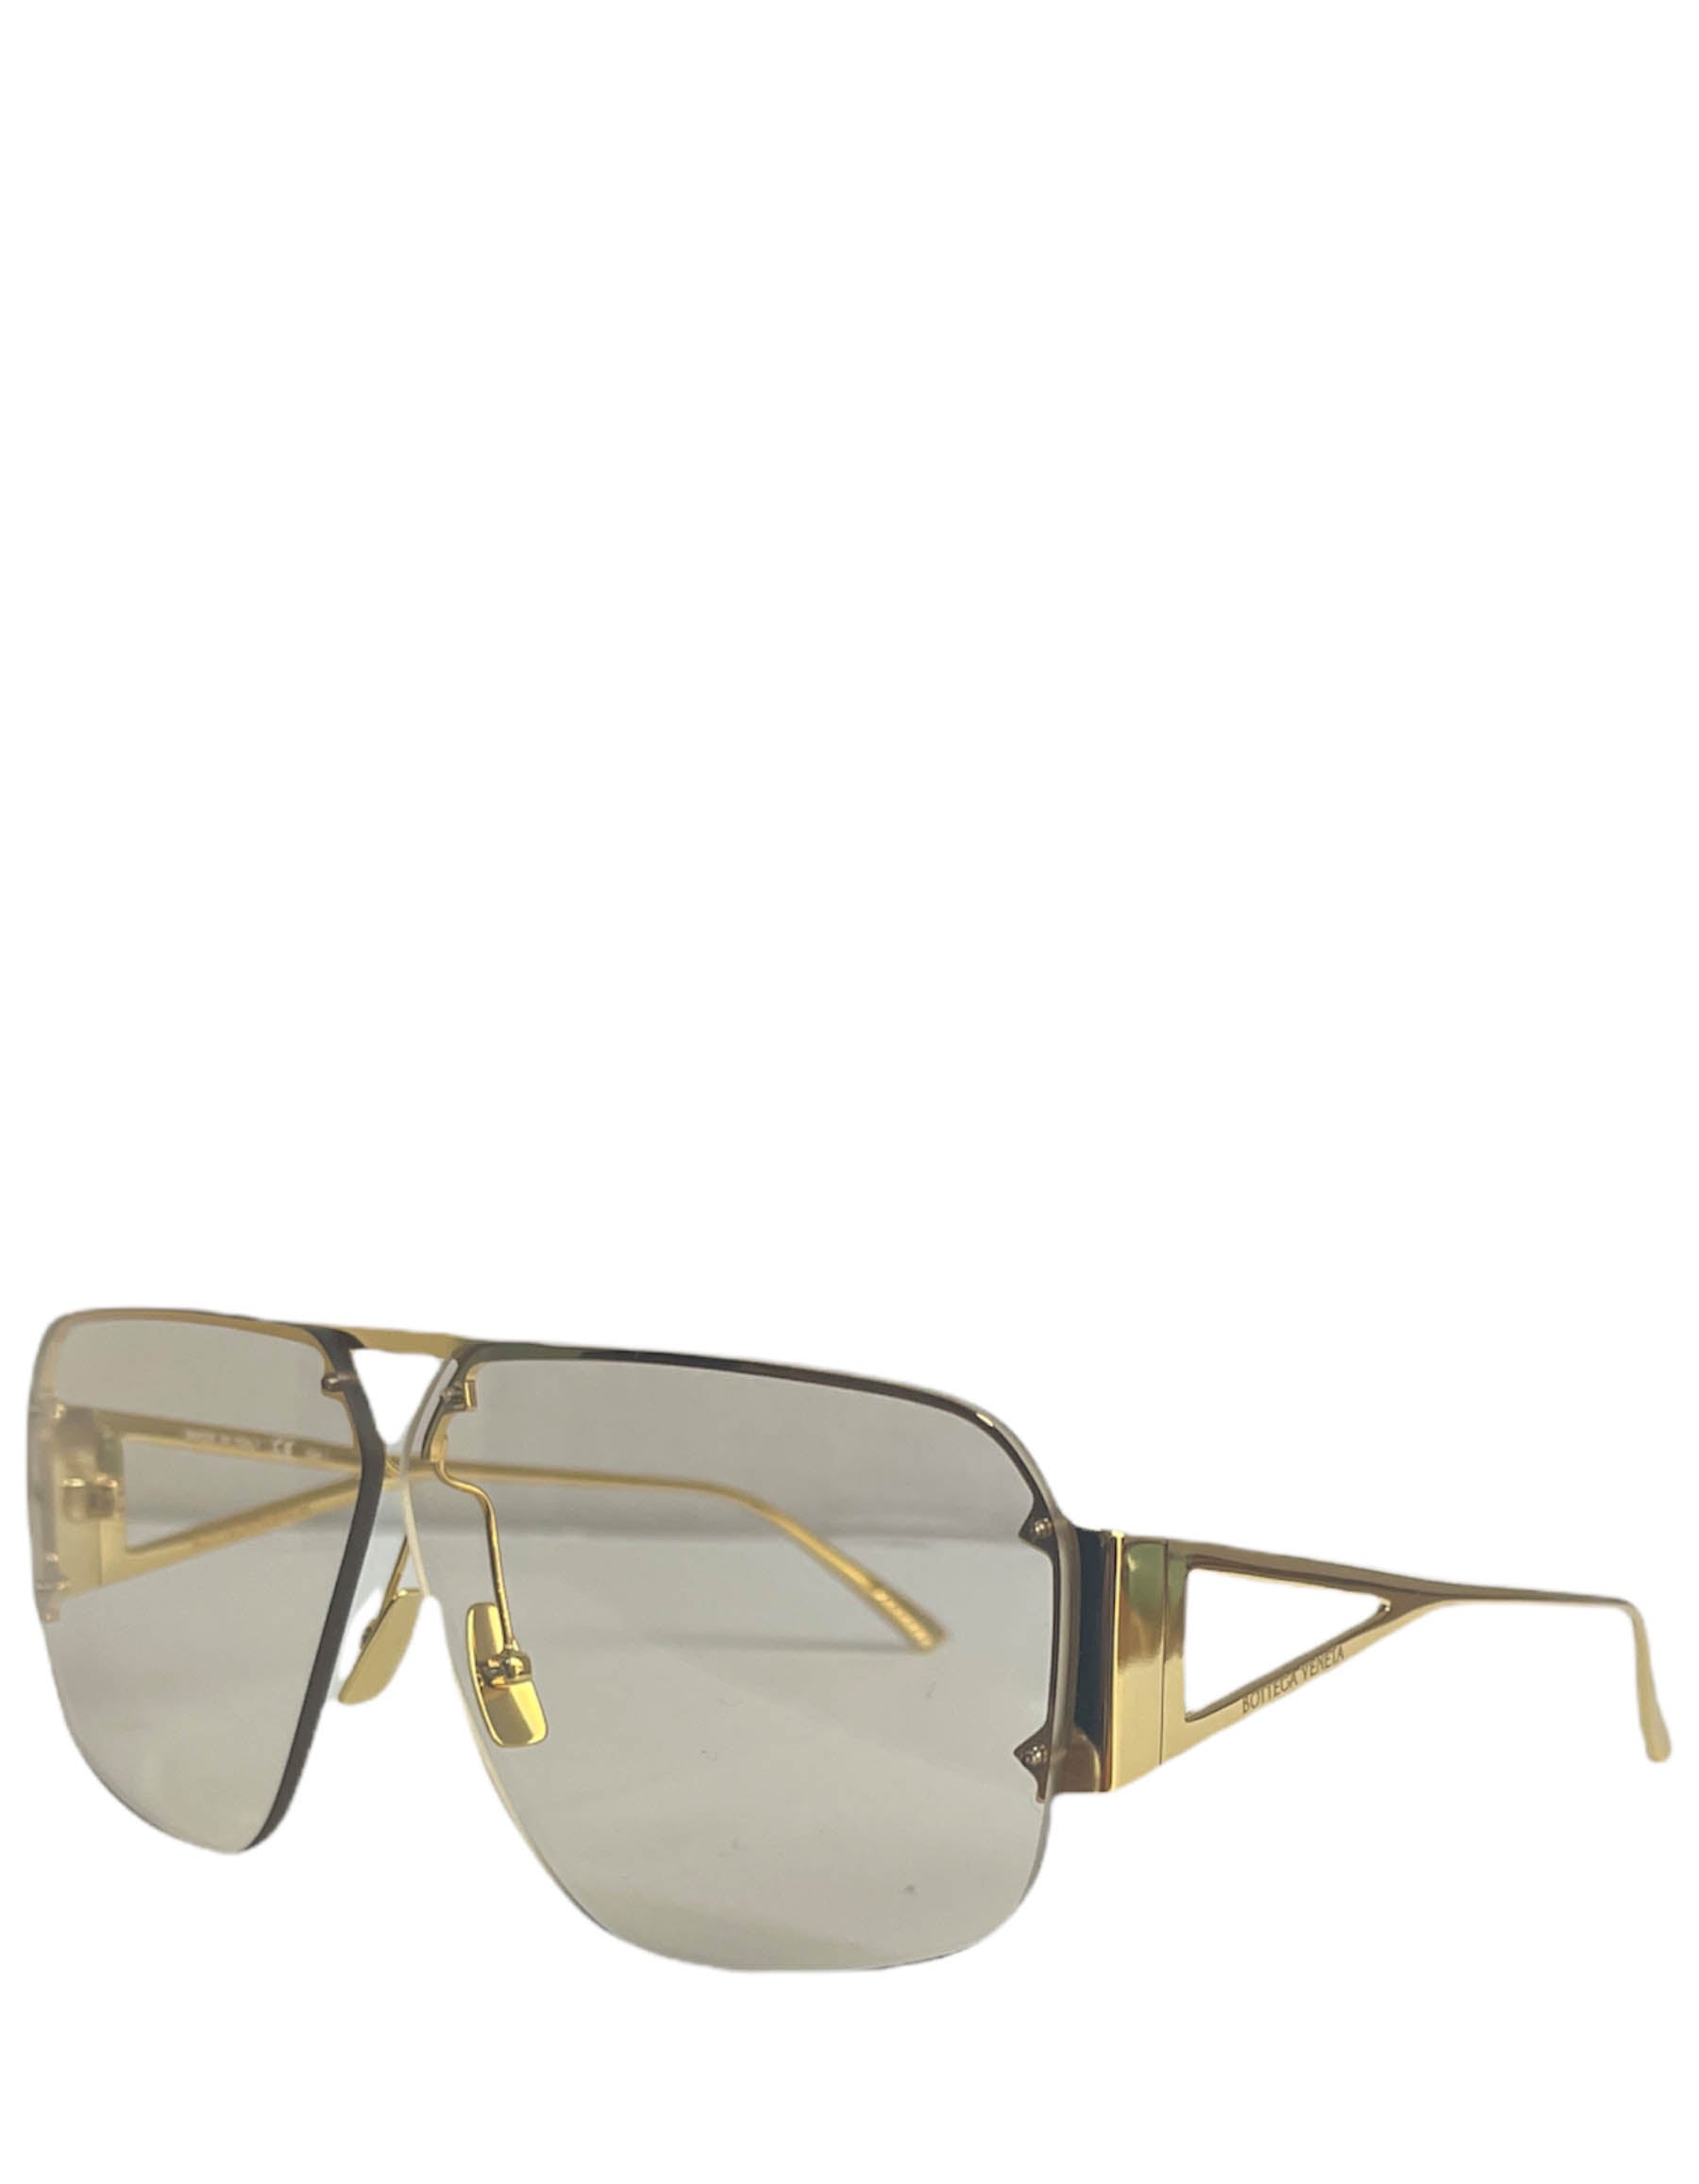 Bottega Veneta Unisex Gold Aviator-Style Sunglasses